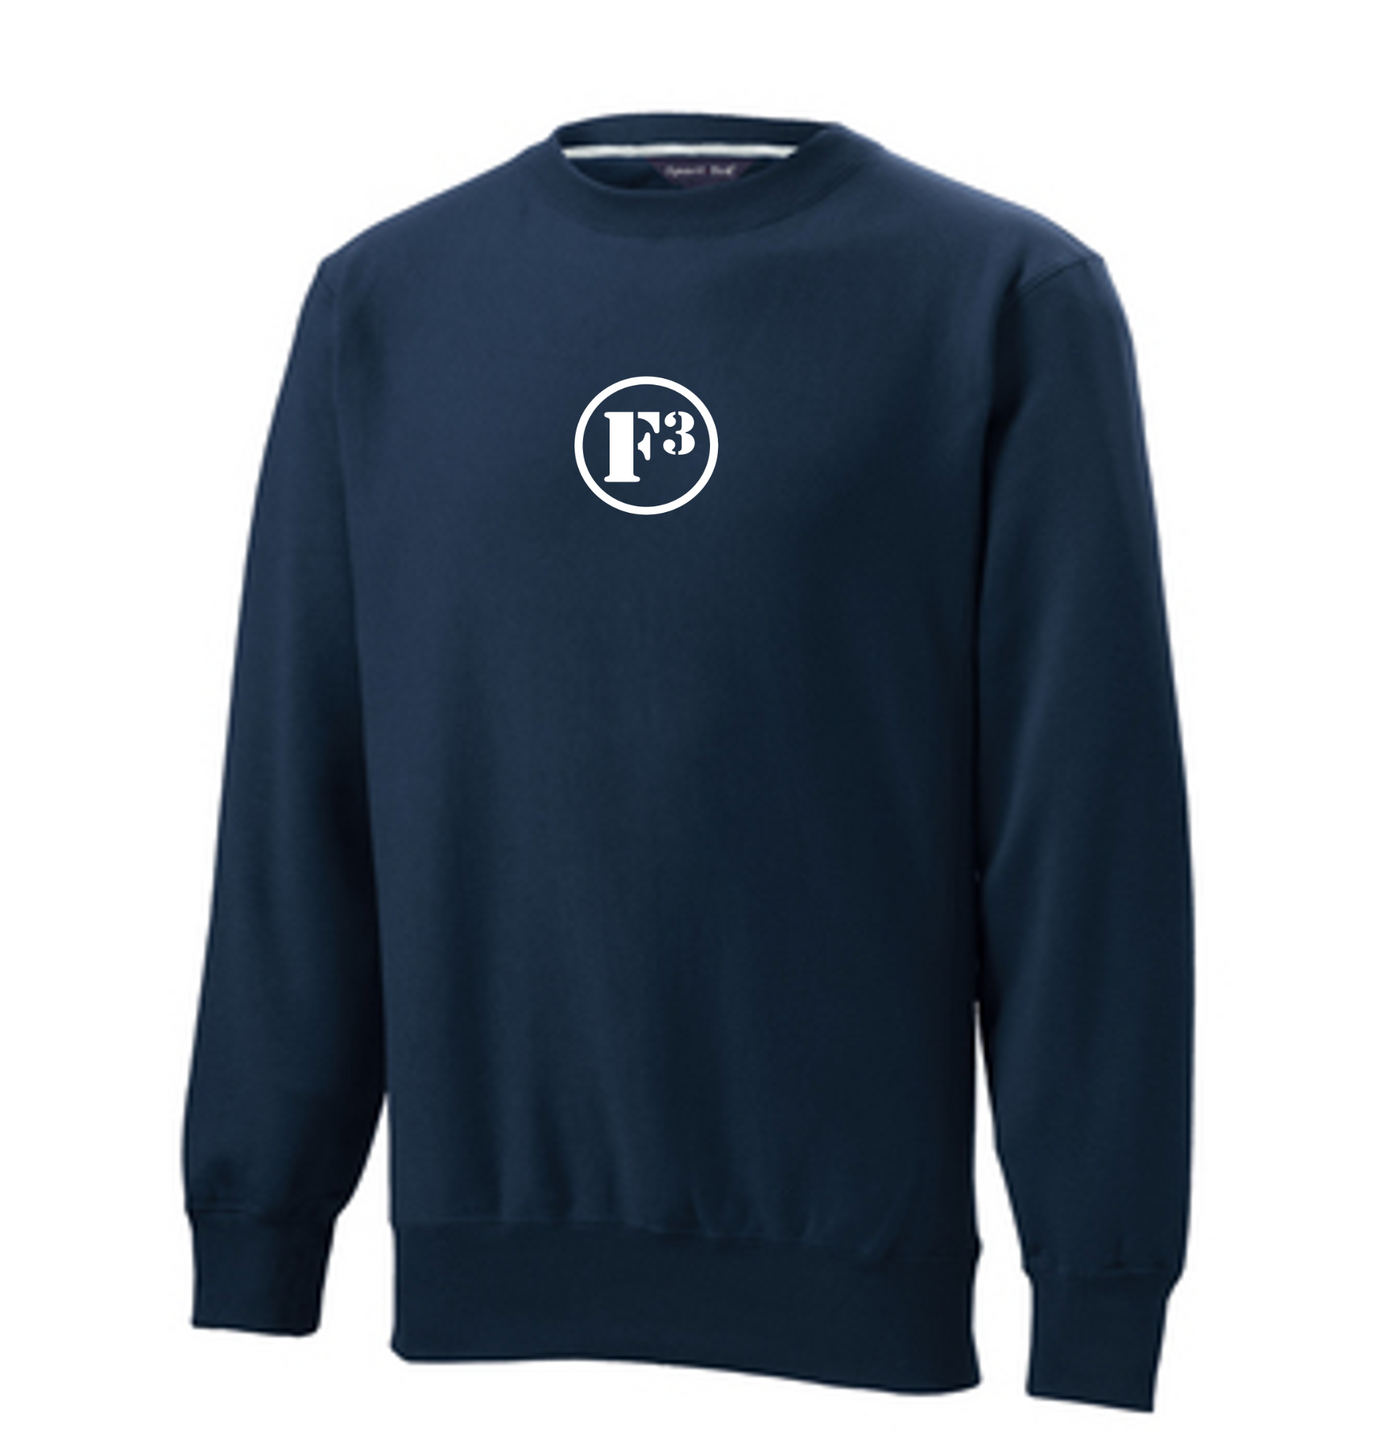 F3 Sport-Tek Heavyweight Crewneck Sweatshirt - Made to Order